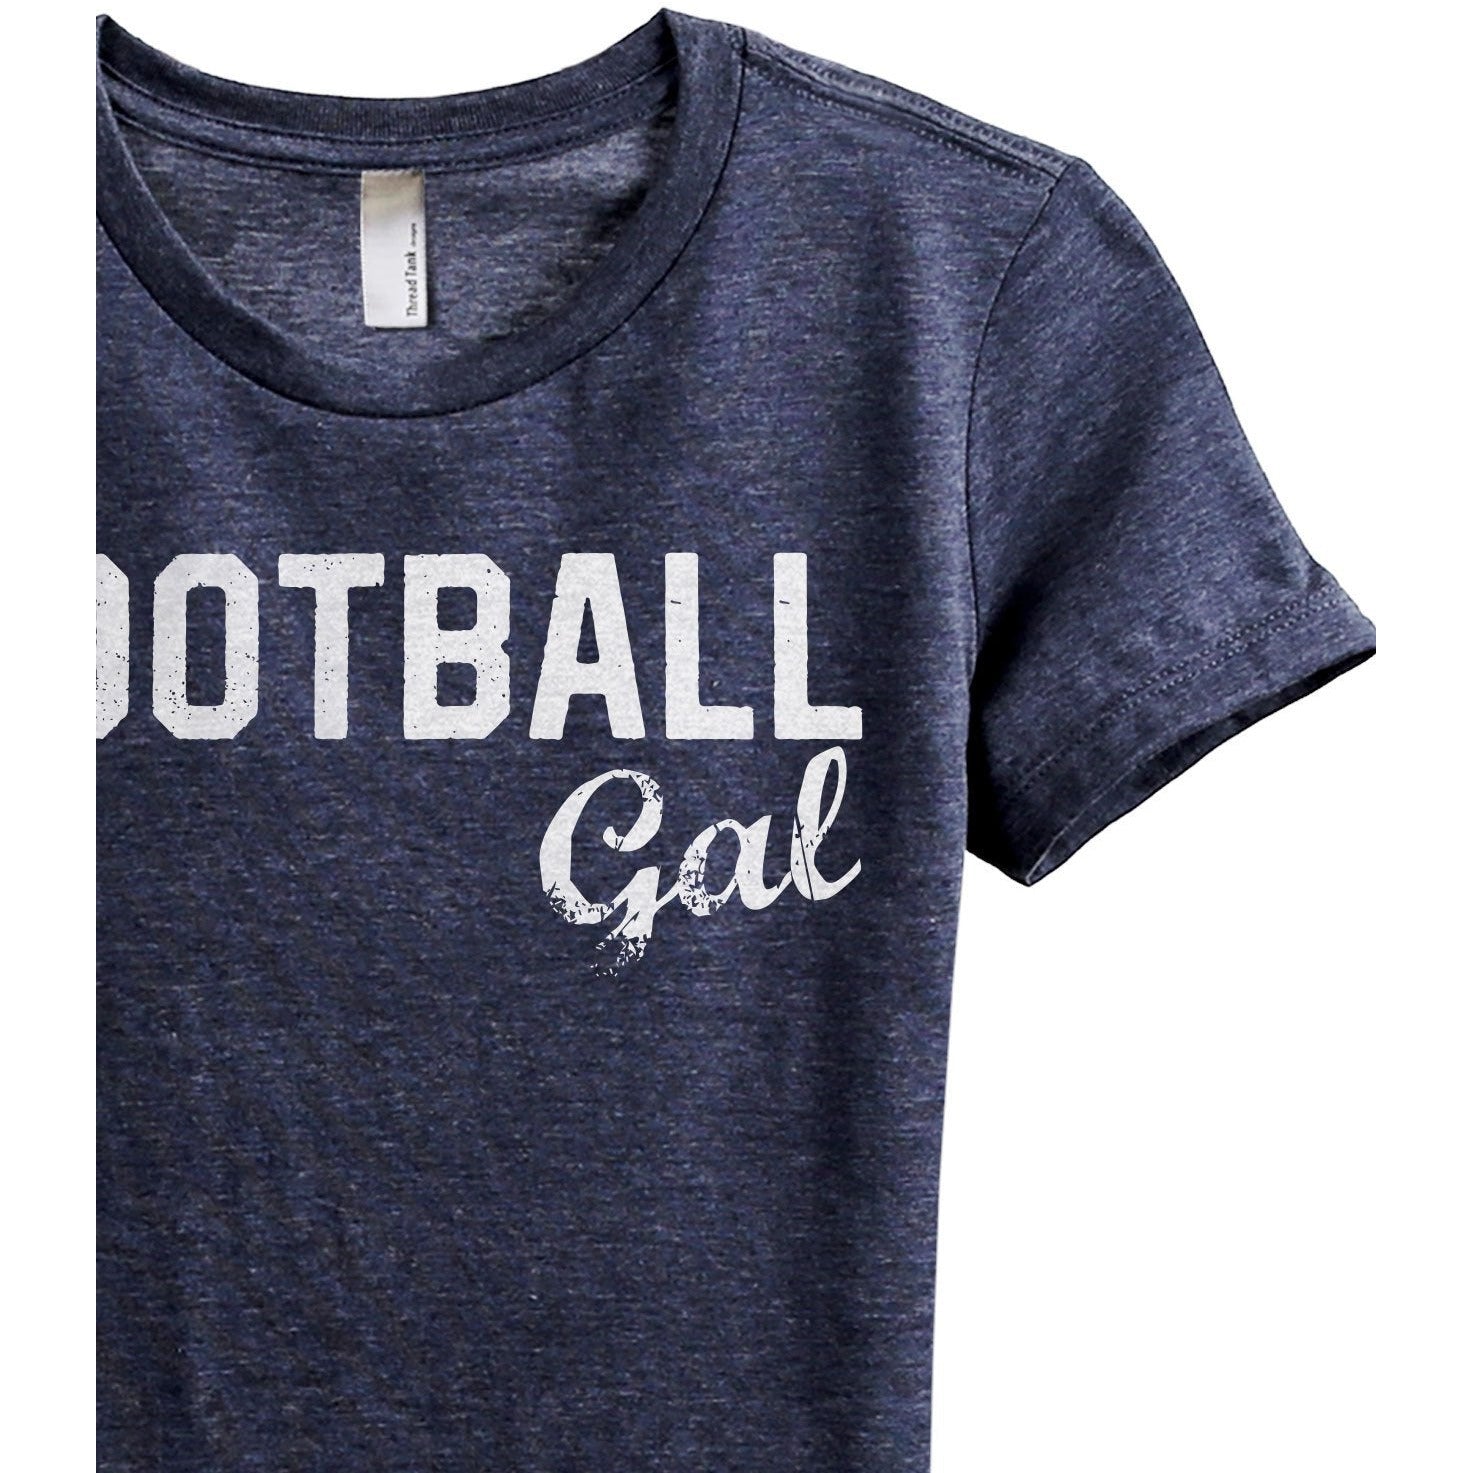 Football Gal Women's Relaxed Crewneck T-Shirt Top Tee Heather Navy Grey Zoom Details